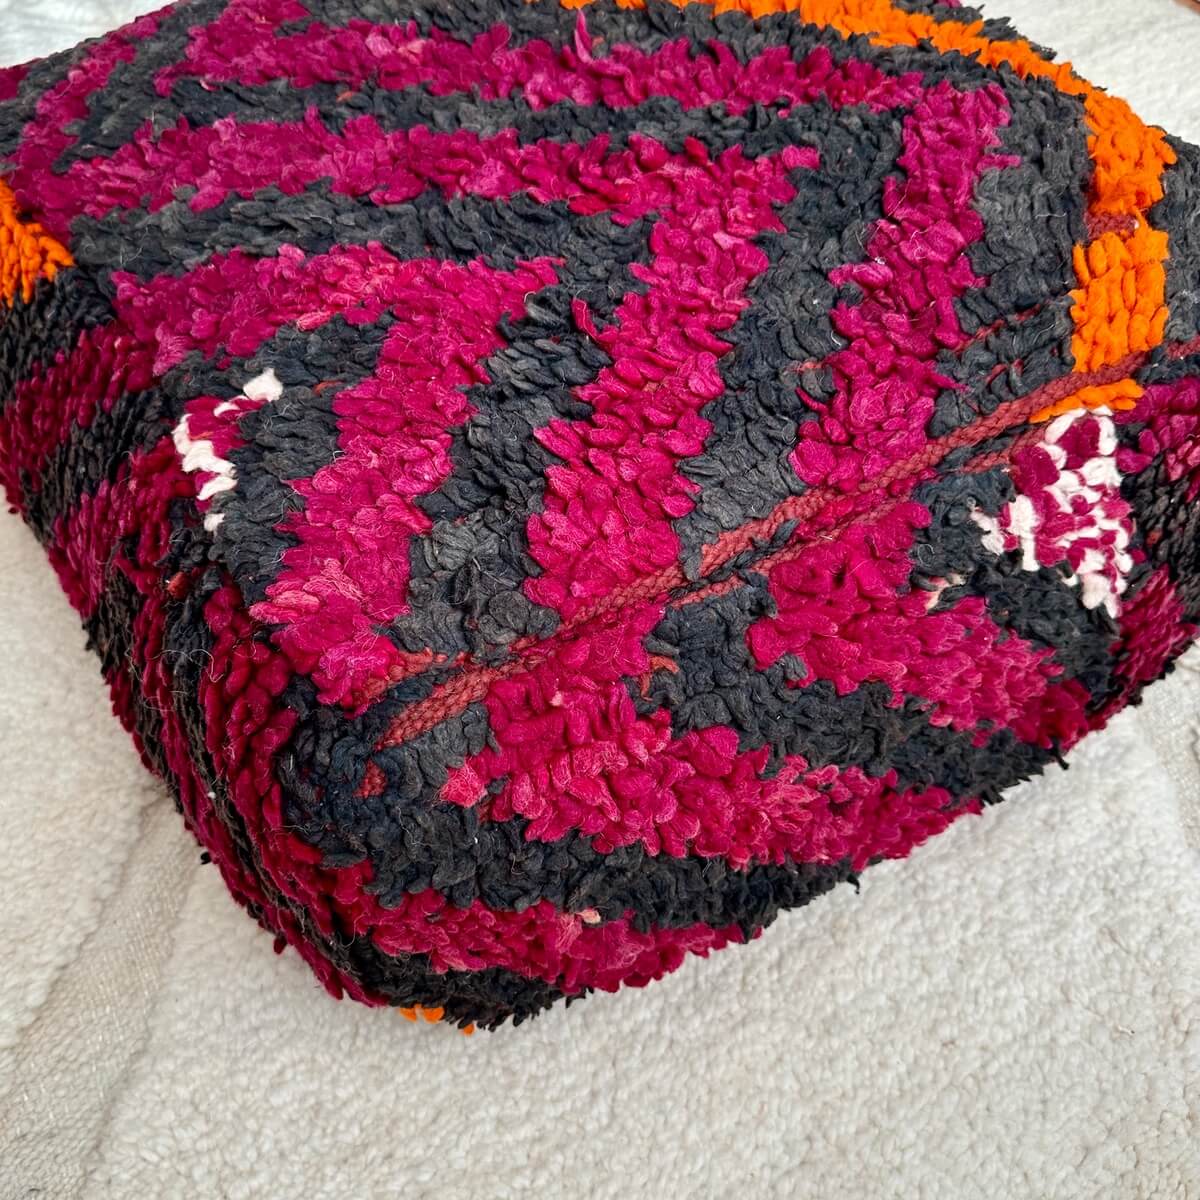 perna de podea marocana realizata dintru-un covor marocan vintage multicolor